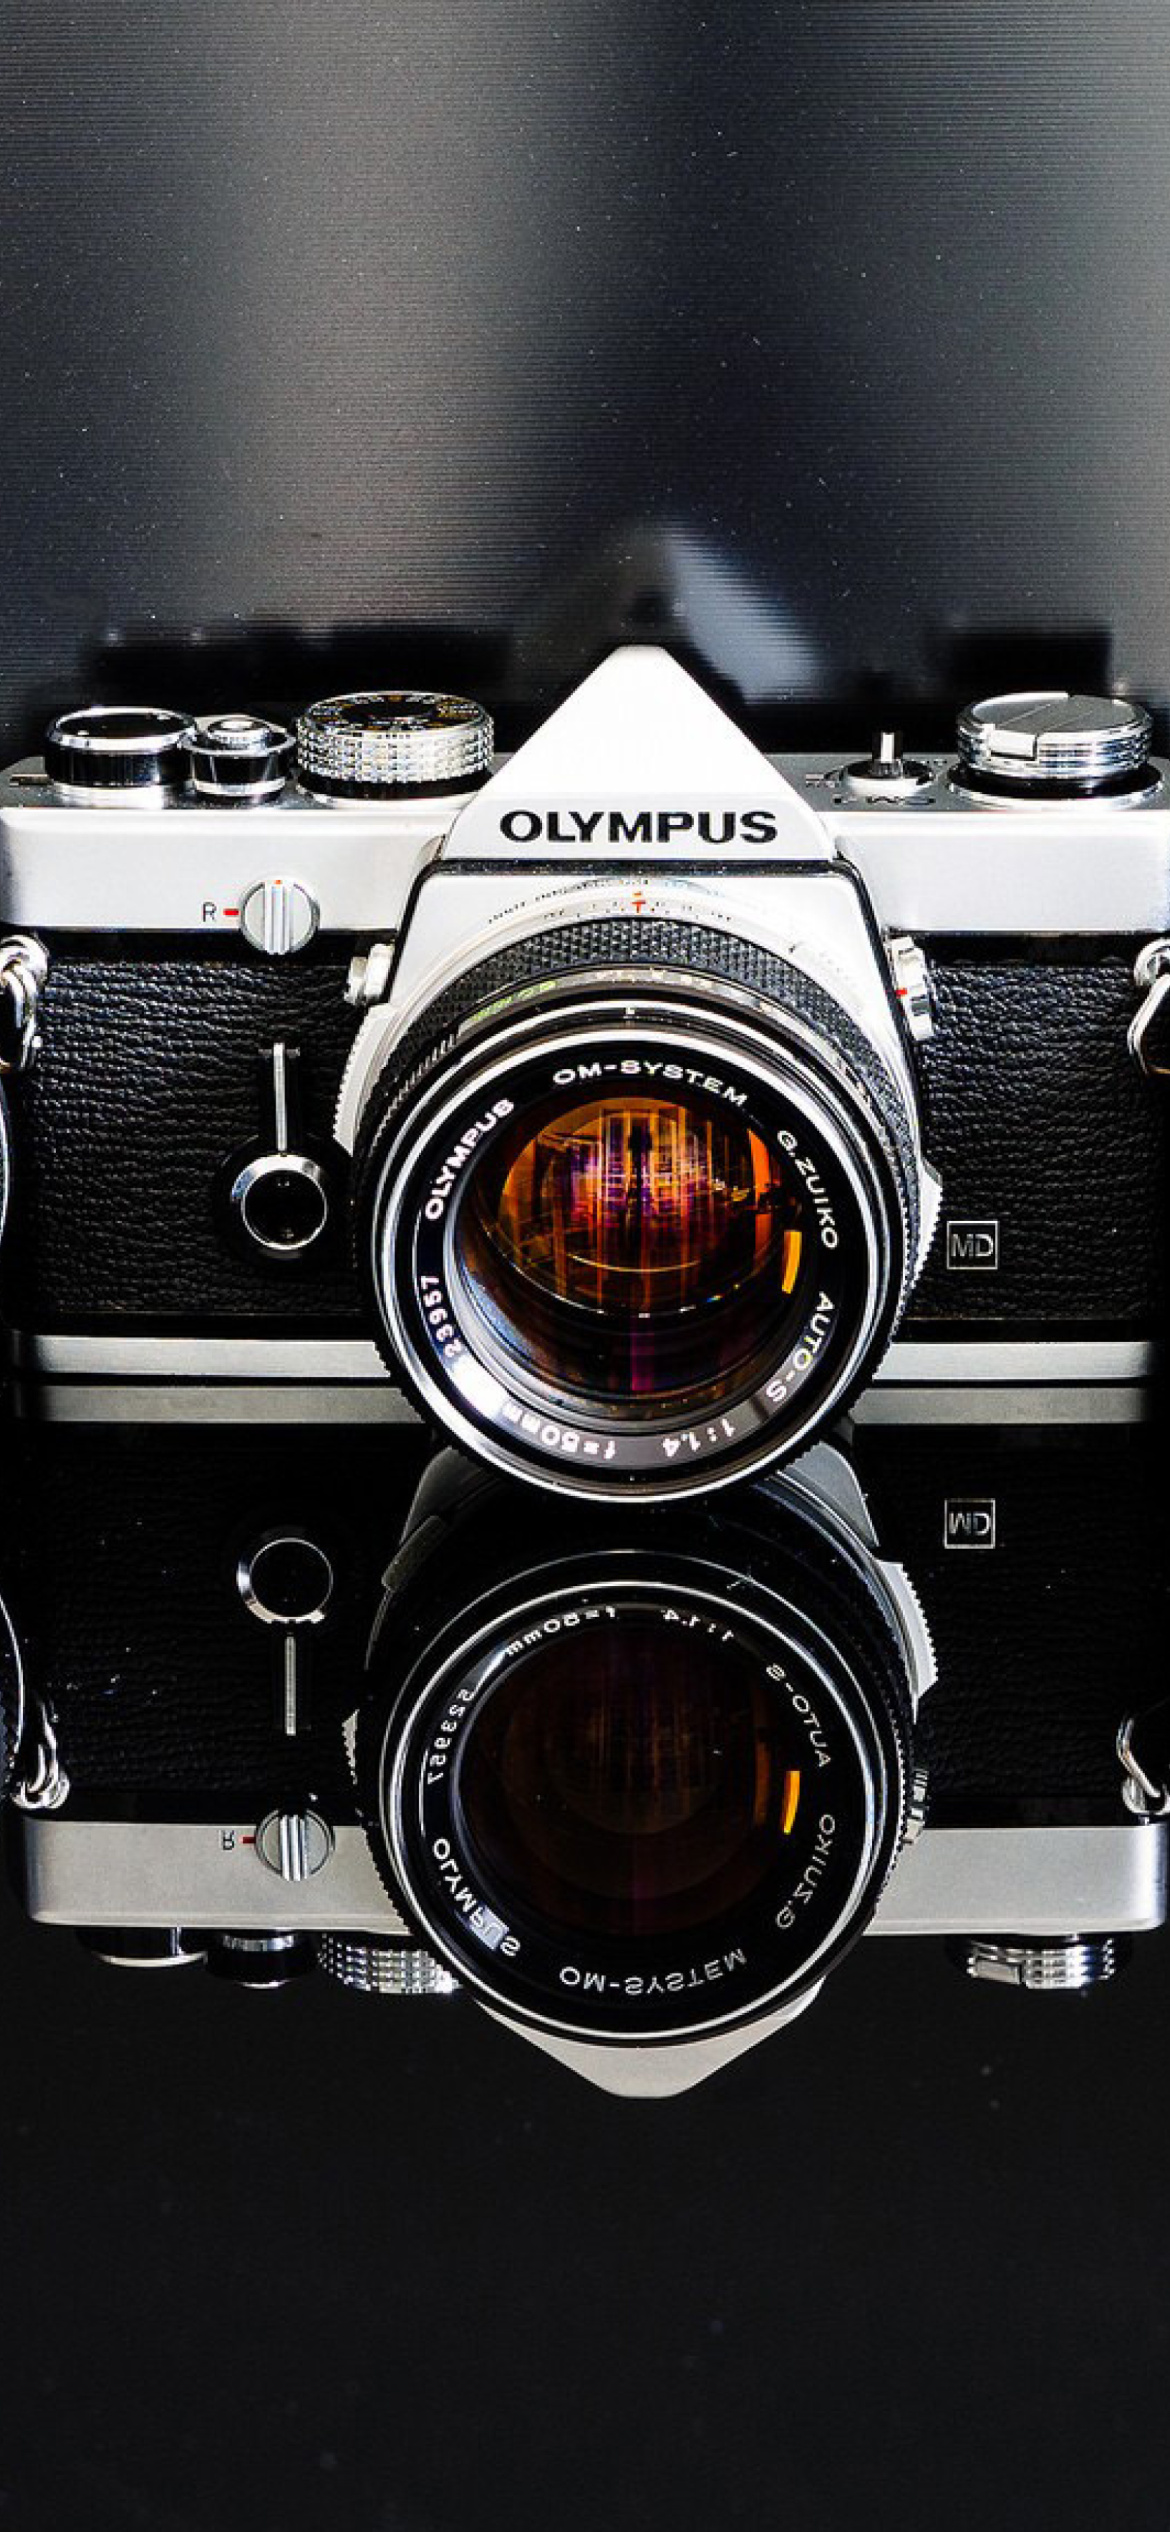 Olympus Camera MD wallpaper 1170x2532